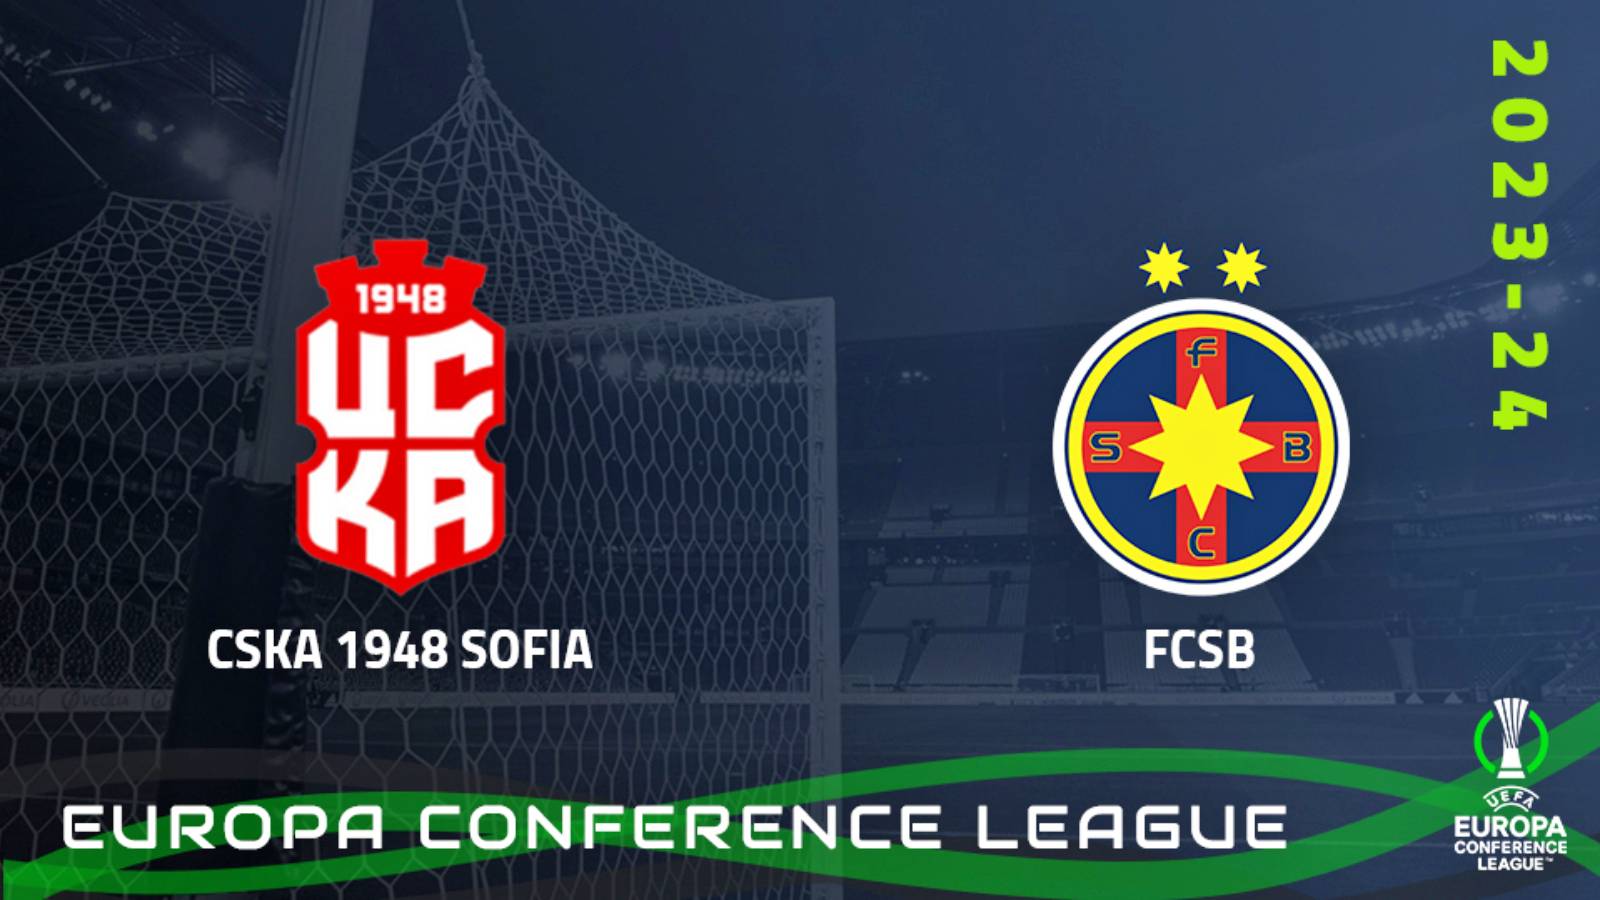 CSKA 1948 SOFIA - FCSB LIVE ANTENA 1 UEFA CONFERENCE LEAGUE PRELIMINARY